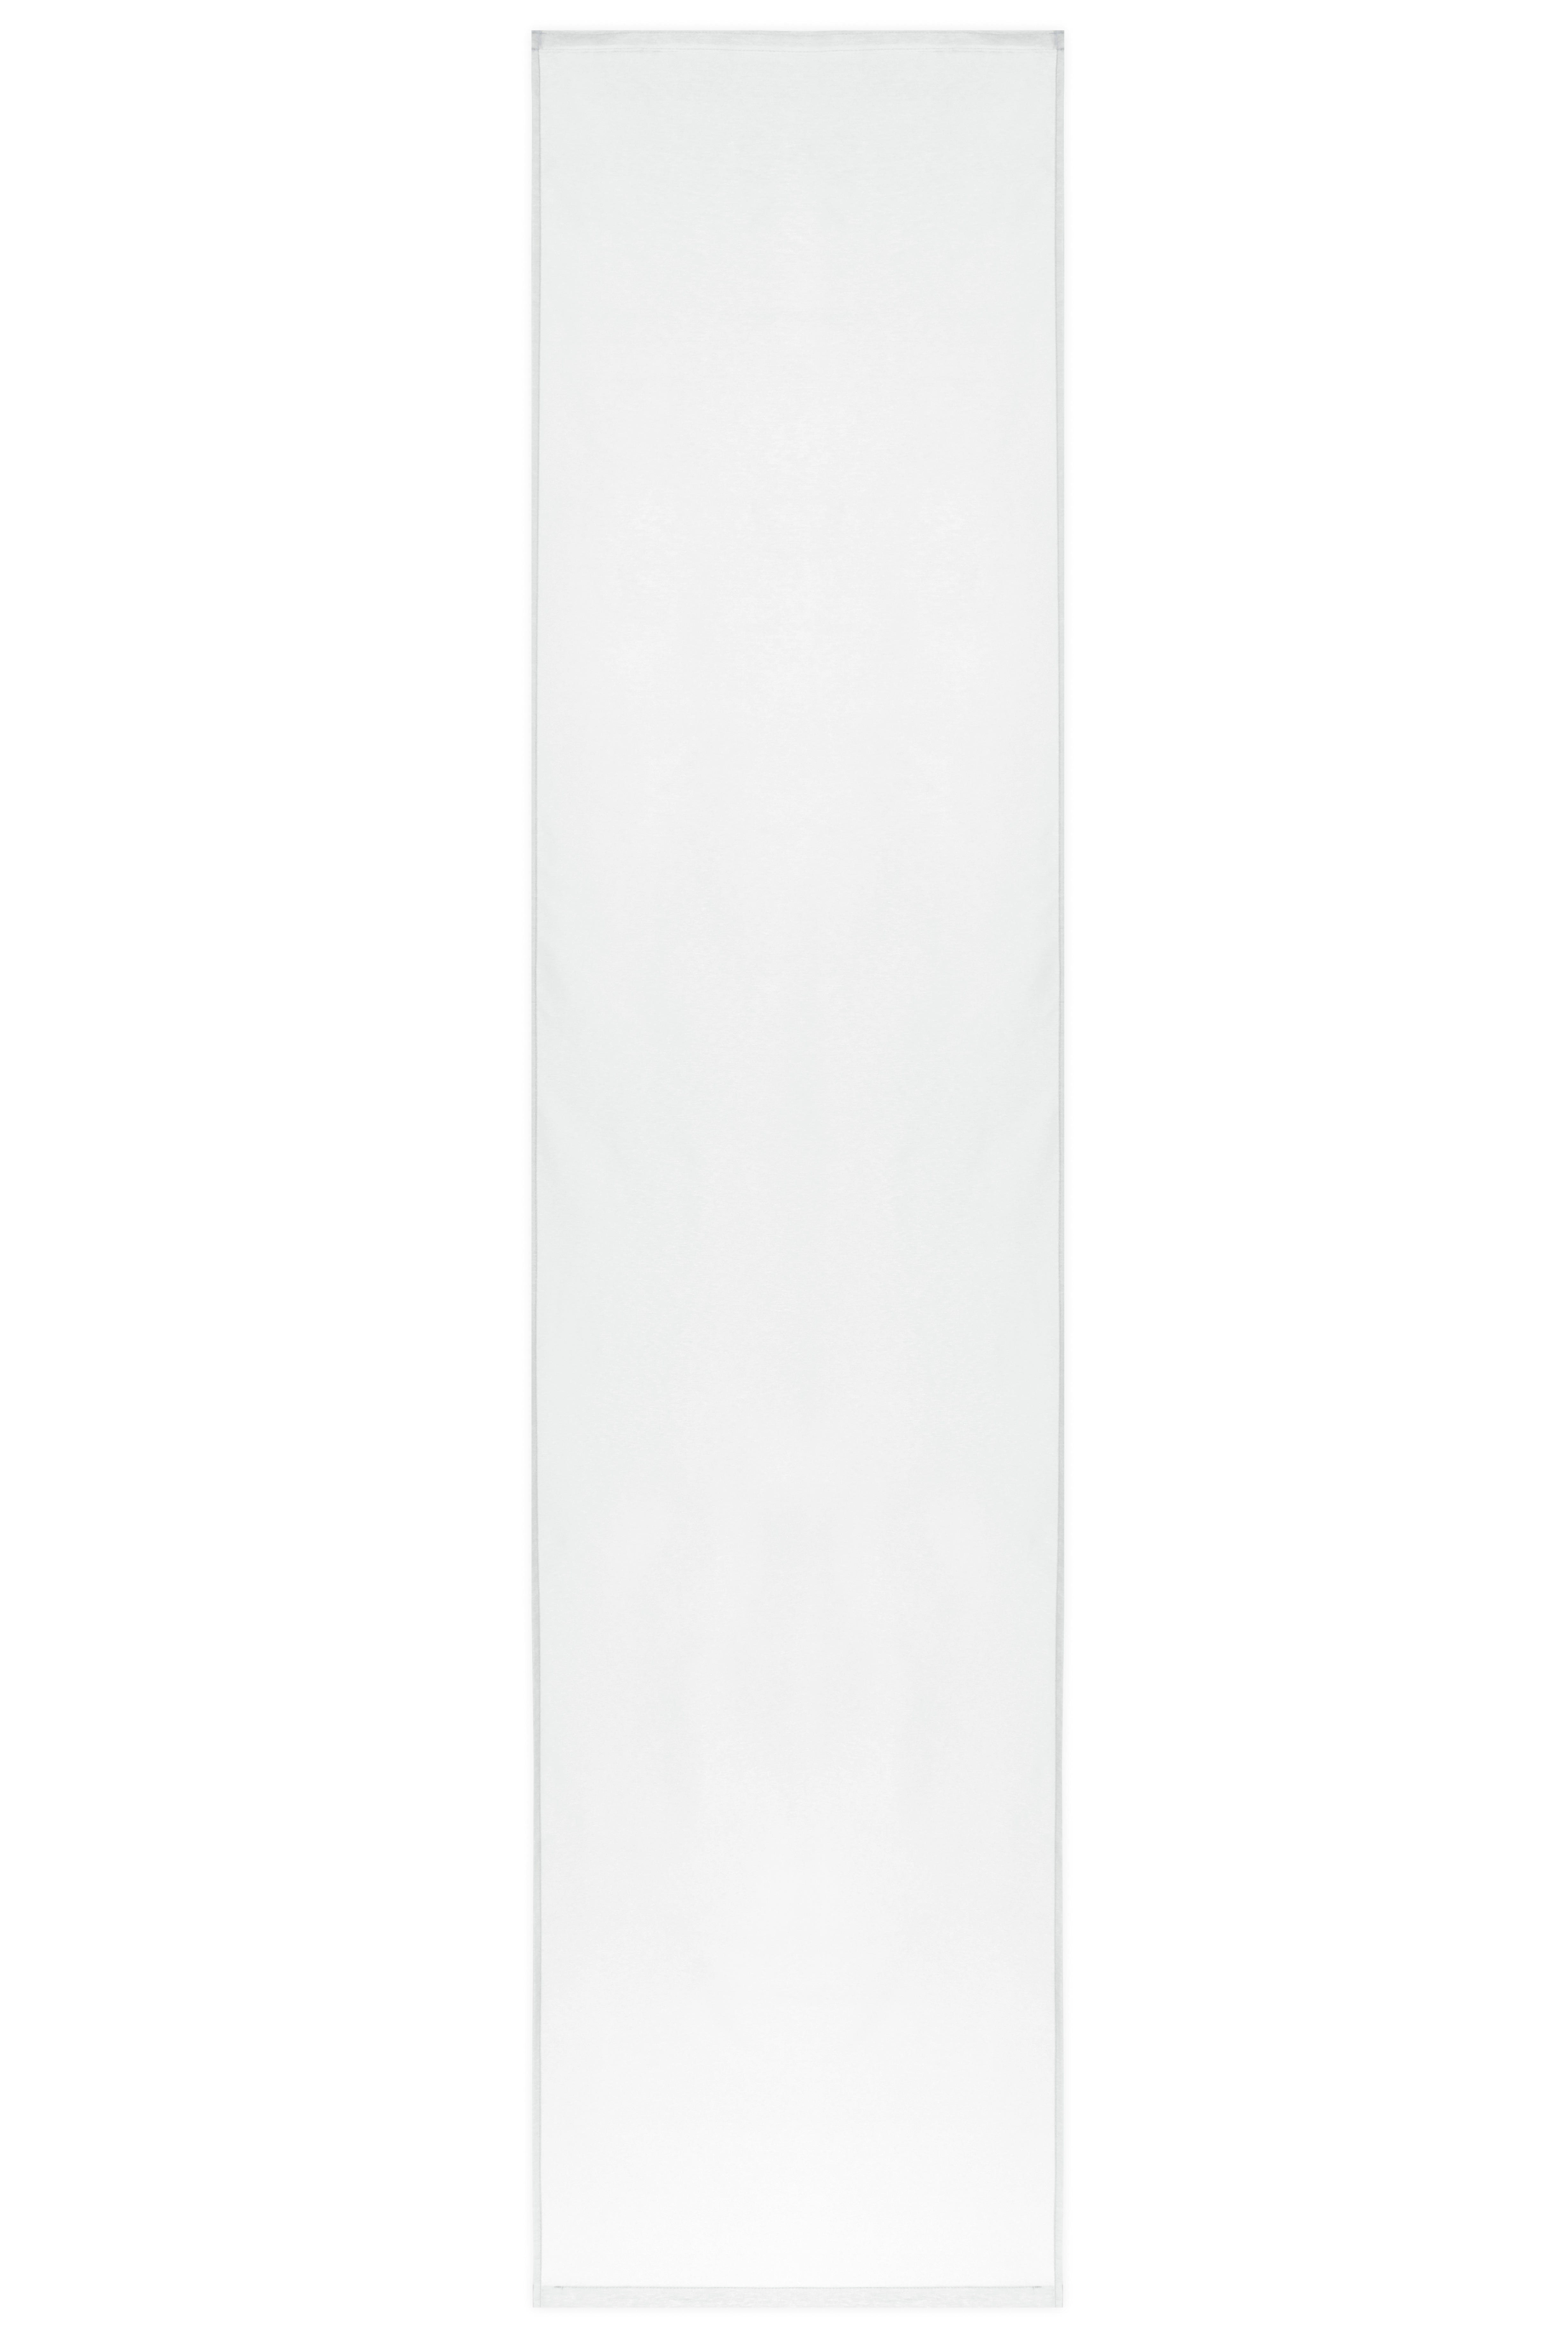 Schiebevorhang Pearl Weiß B/l: Ca. 60x245 Cm Pearl - weiß (60,00/245,00cm)